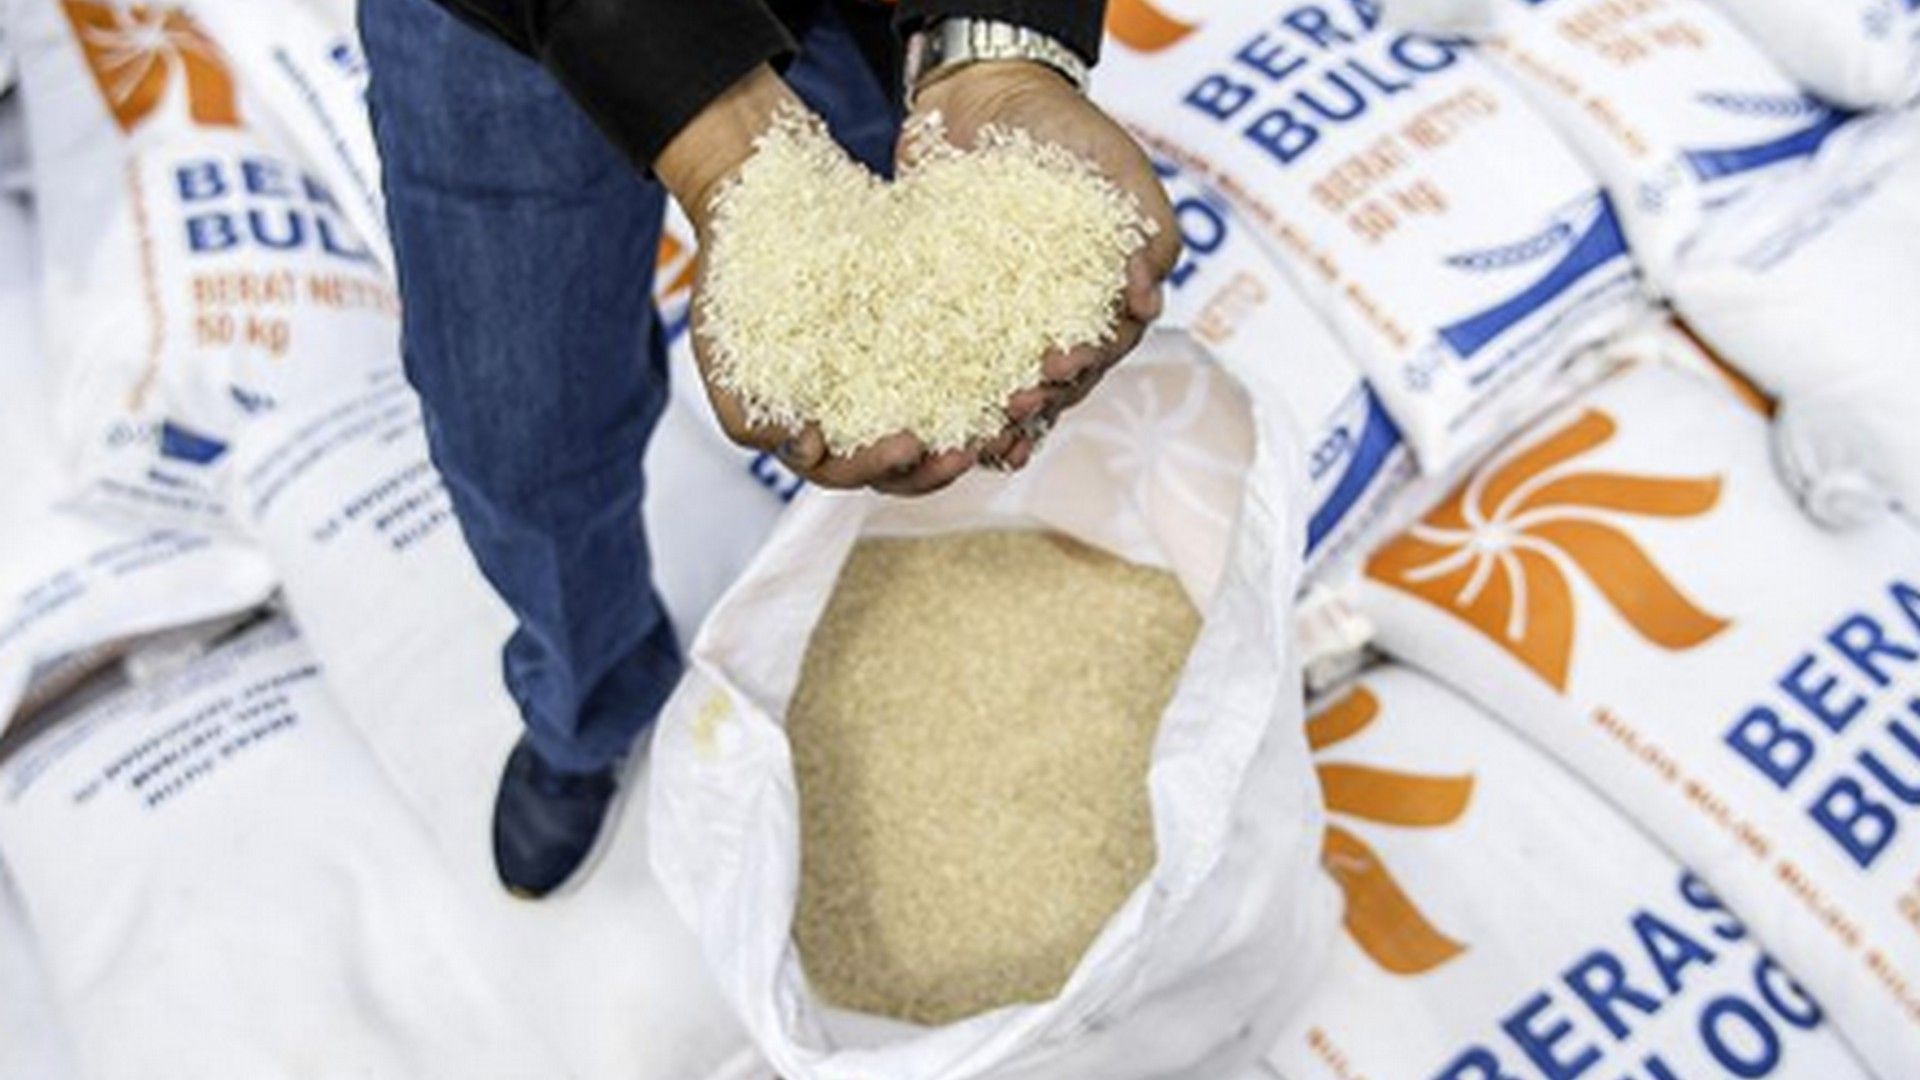 Harga beras naik, untuk mencegah kenaikan disiapkan pula import